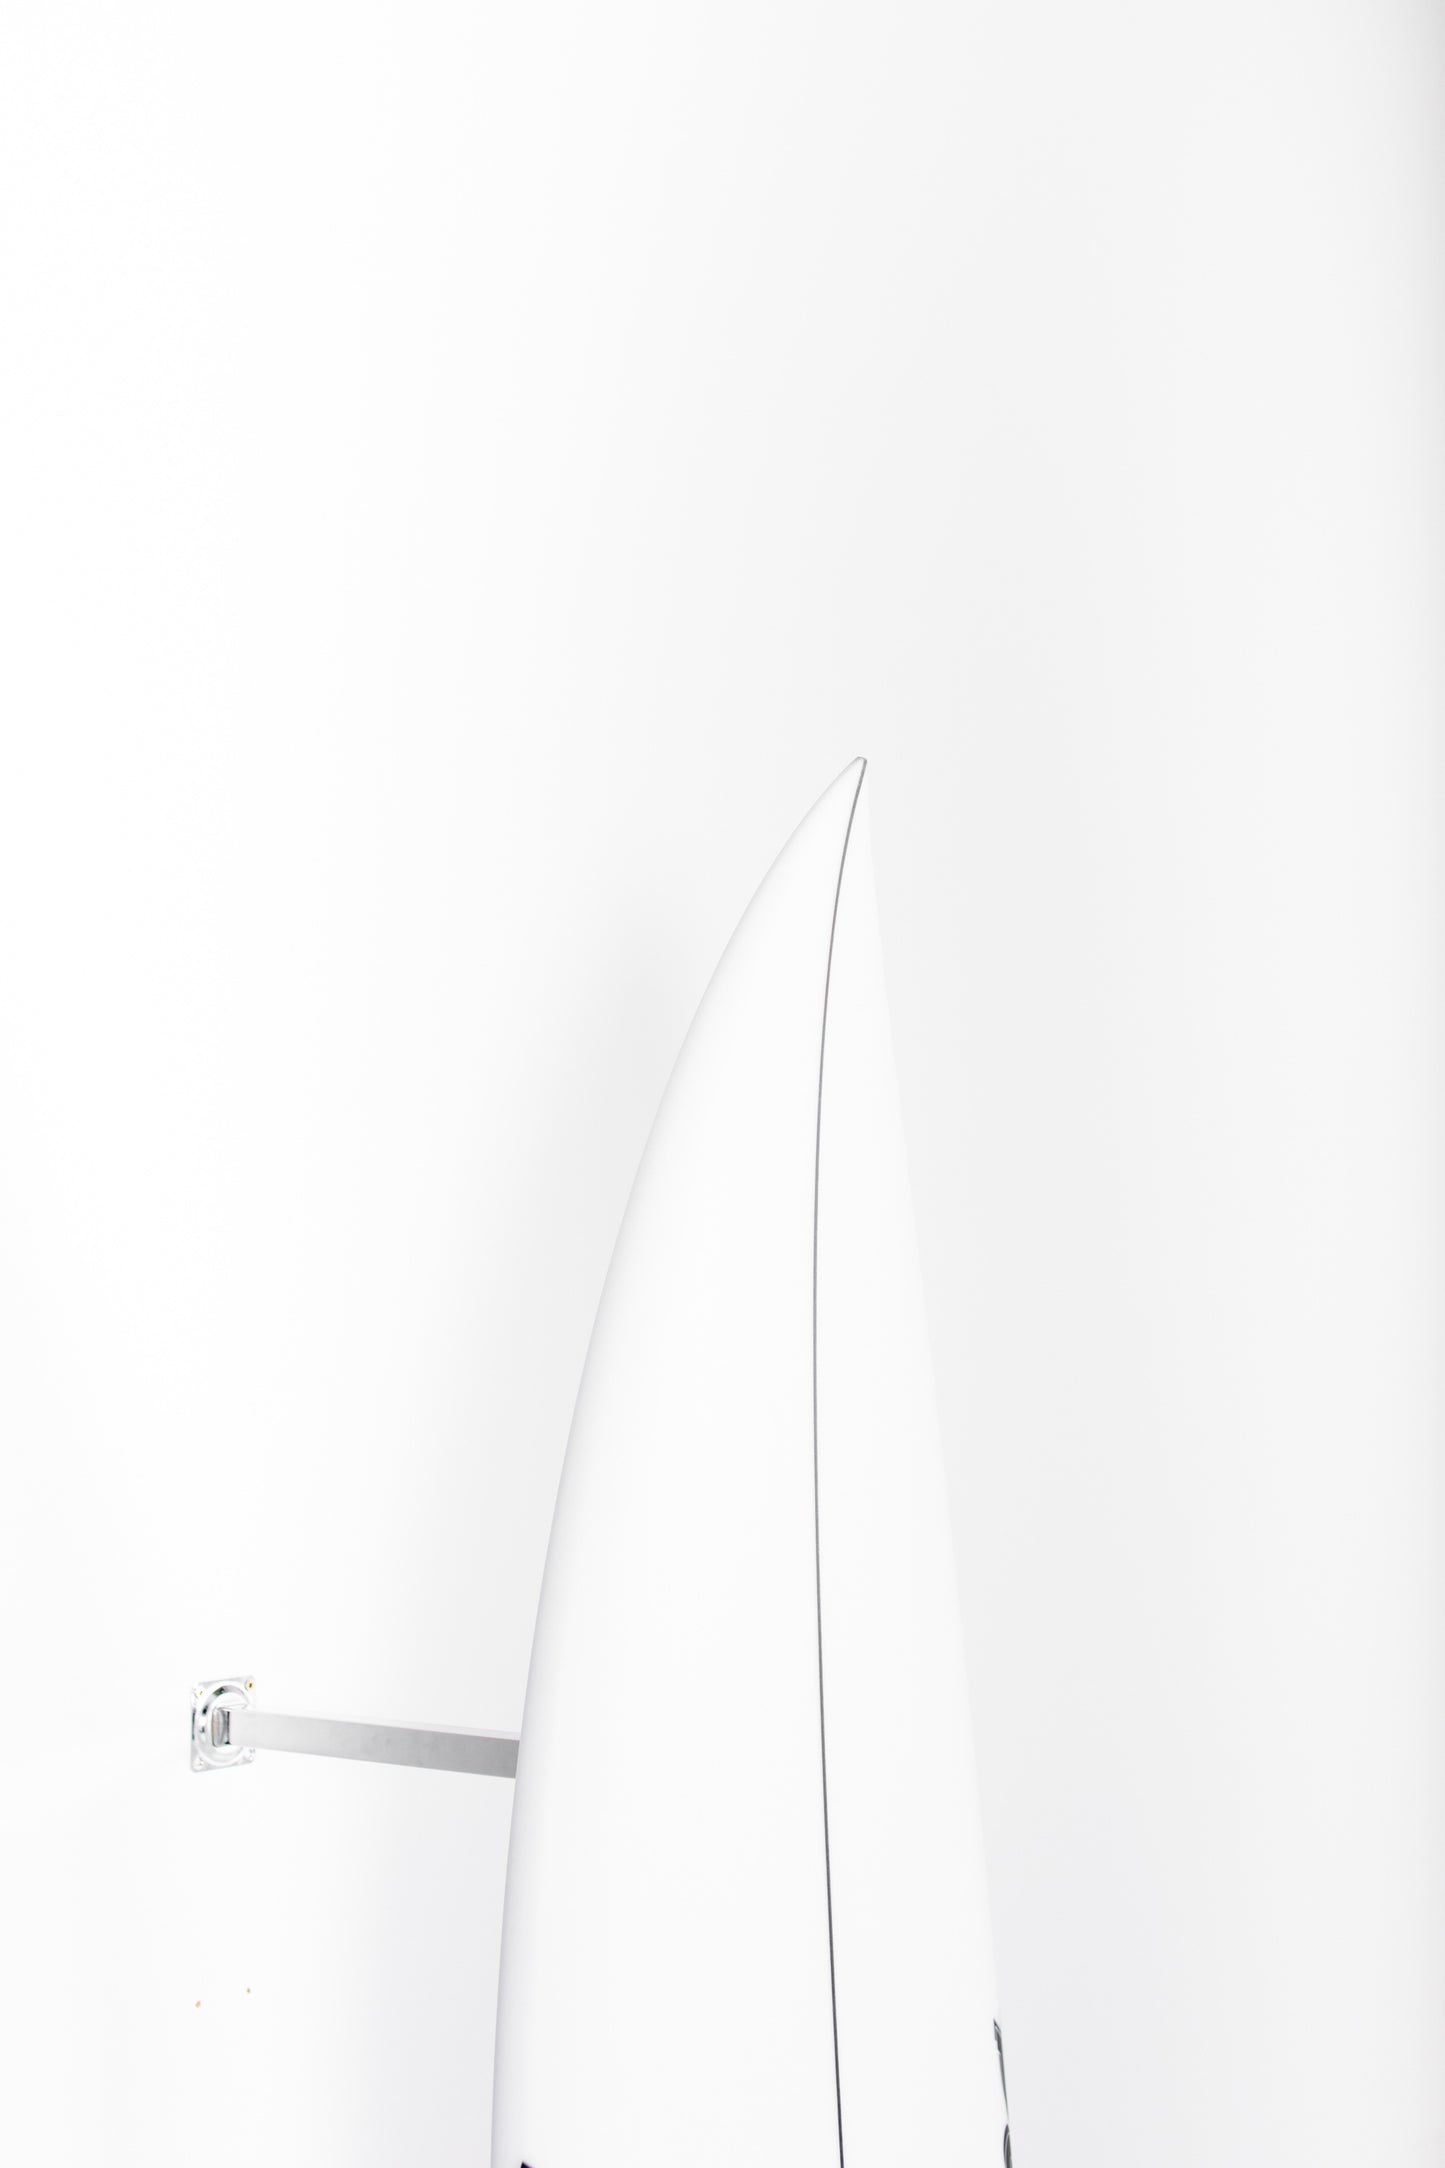 
                  
                    Pukas Surf shop - Pukas Surfboard - DARK by Axel Lorentz - 6’1” x 19,63 x 2,4 - 30,67L - AX05948
                  
                